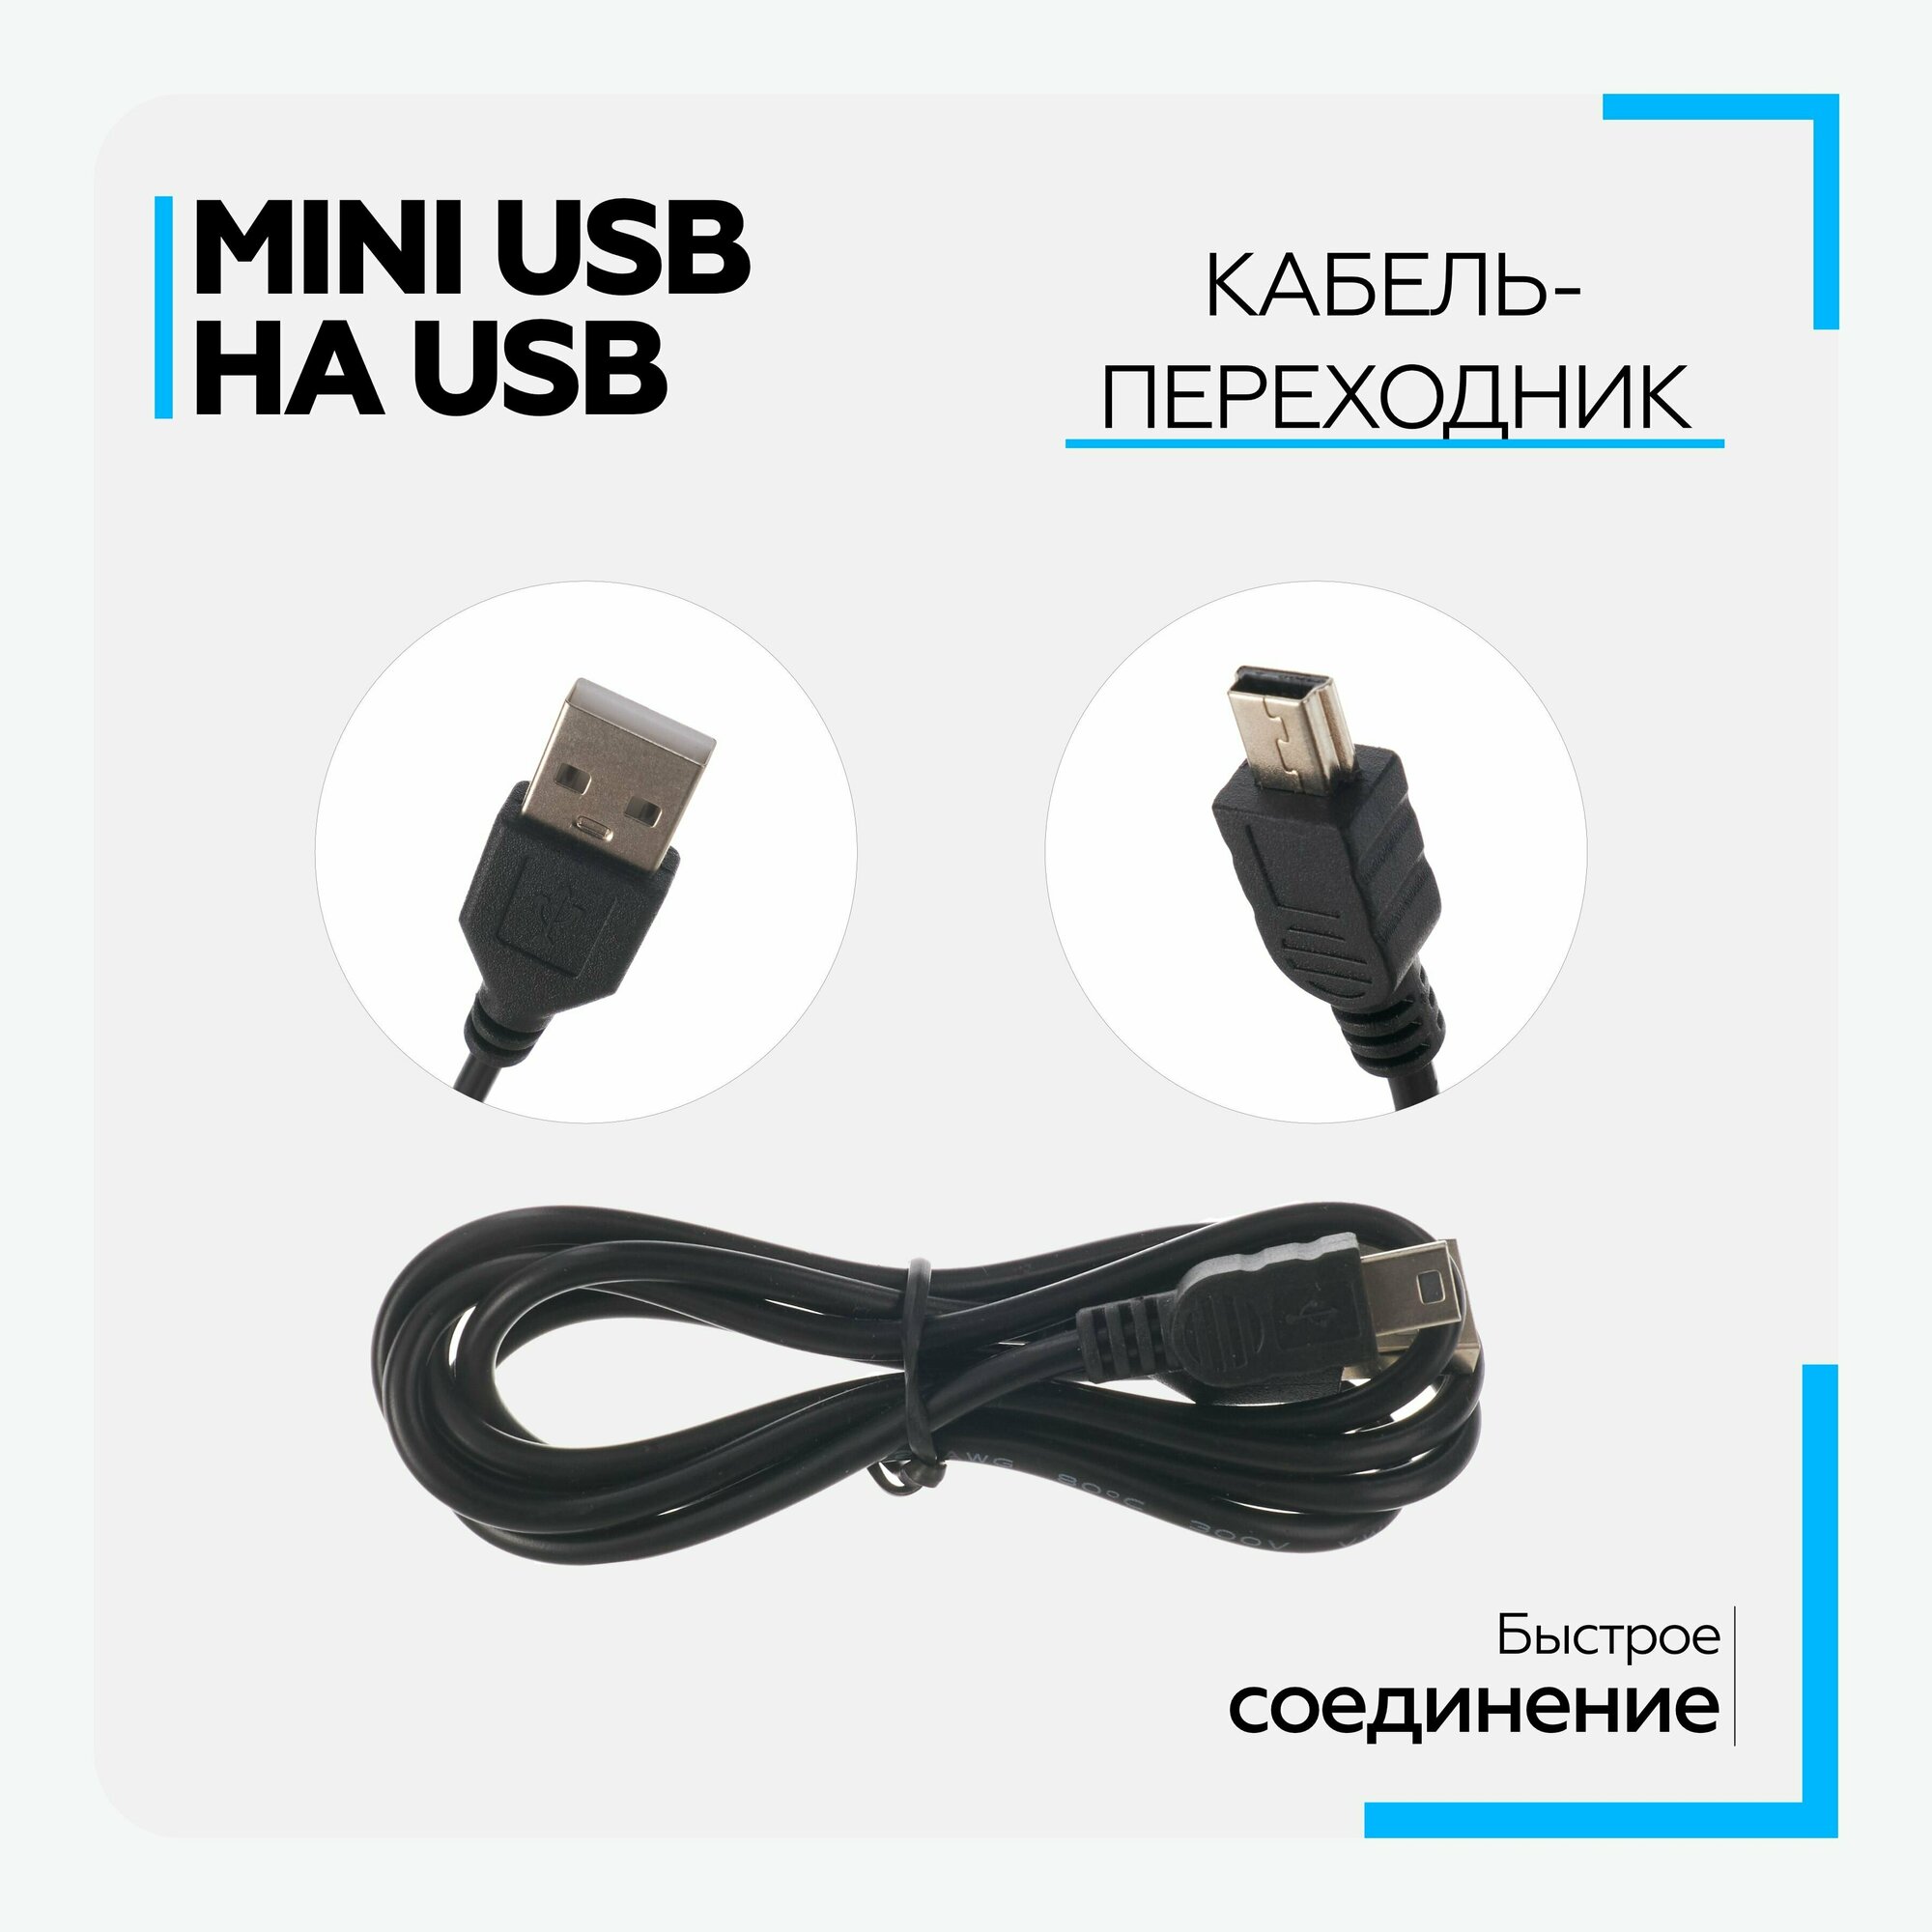 USB кабель Mini USB (1м), для фотоаппарата, видеорегистратора и других устройств